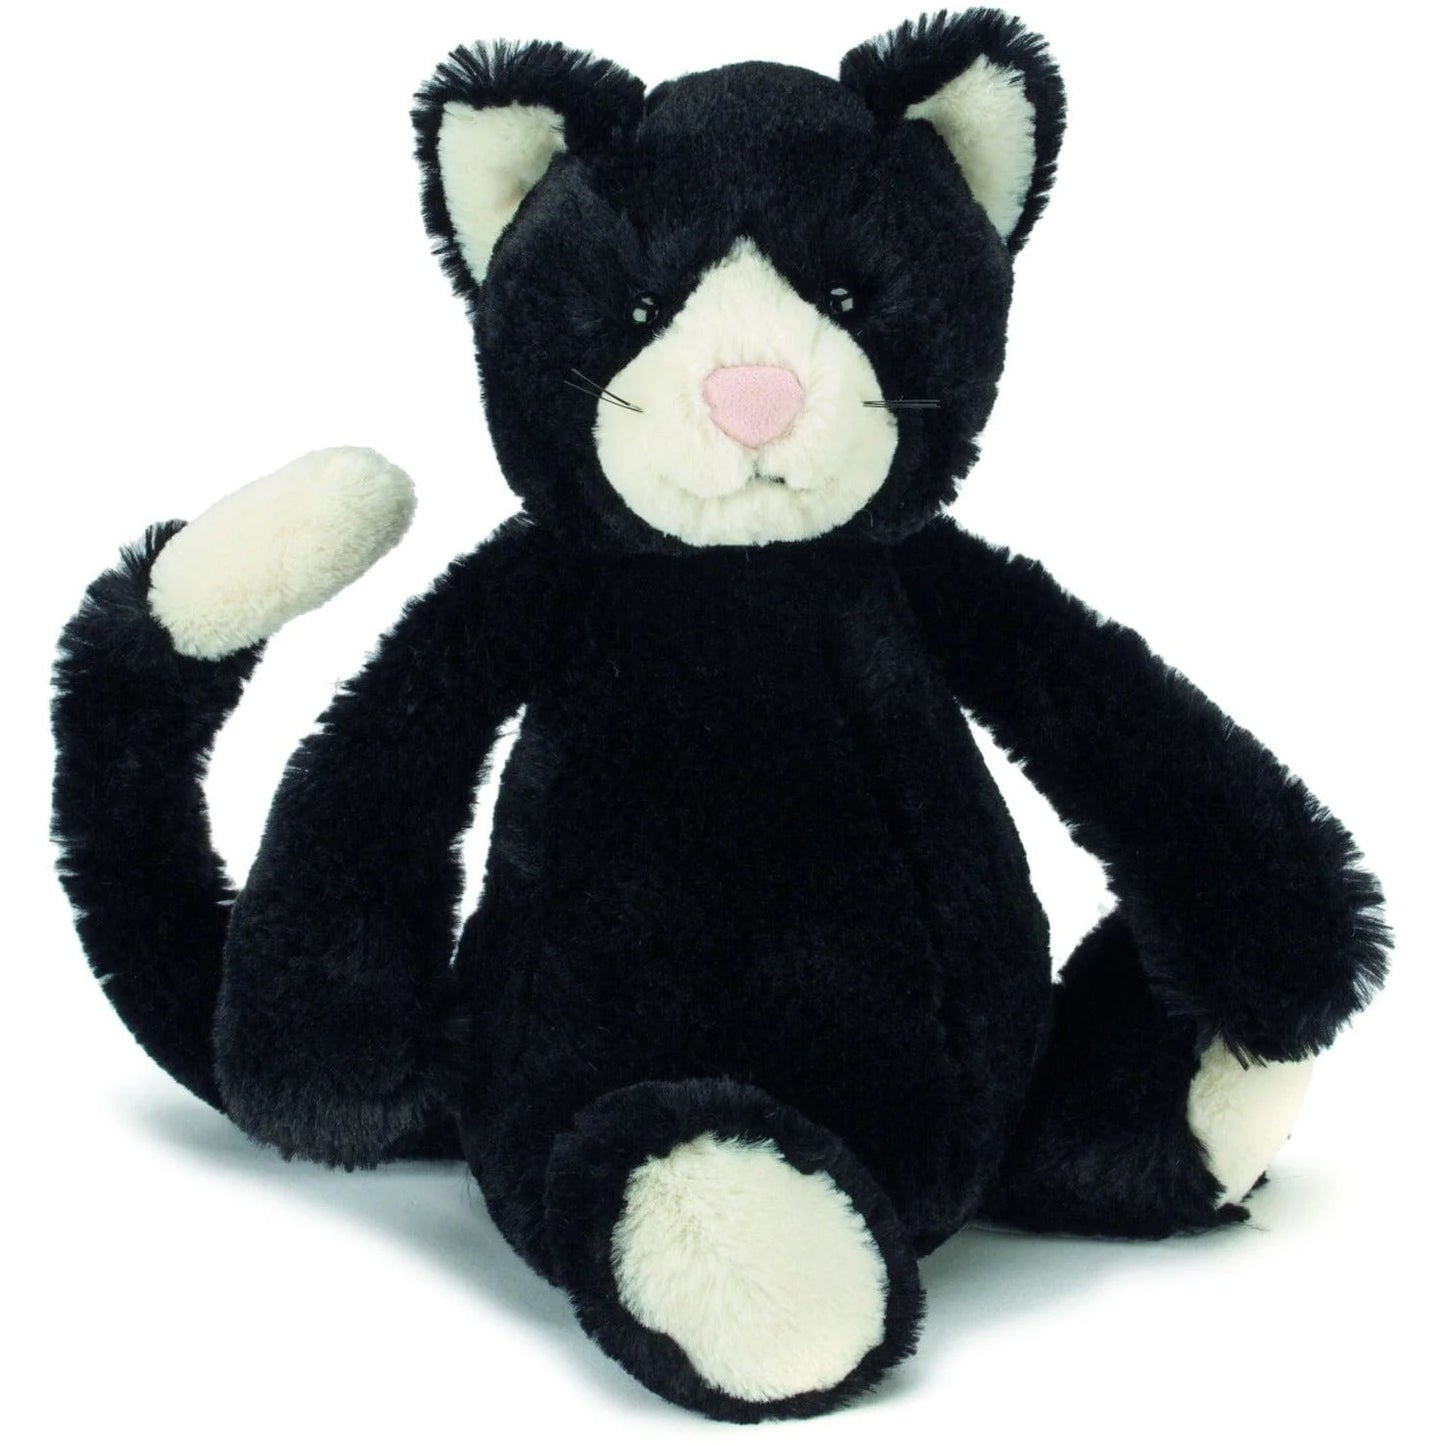 Jellycat Original Bashful Black cat with hat